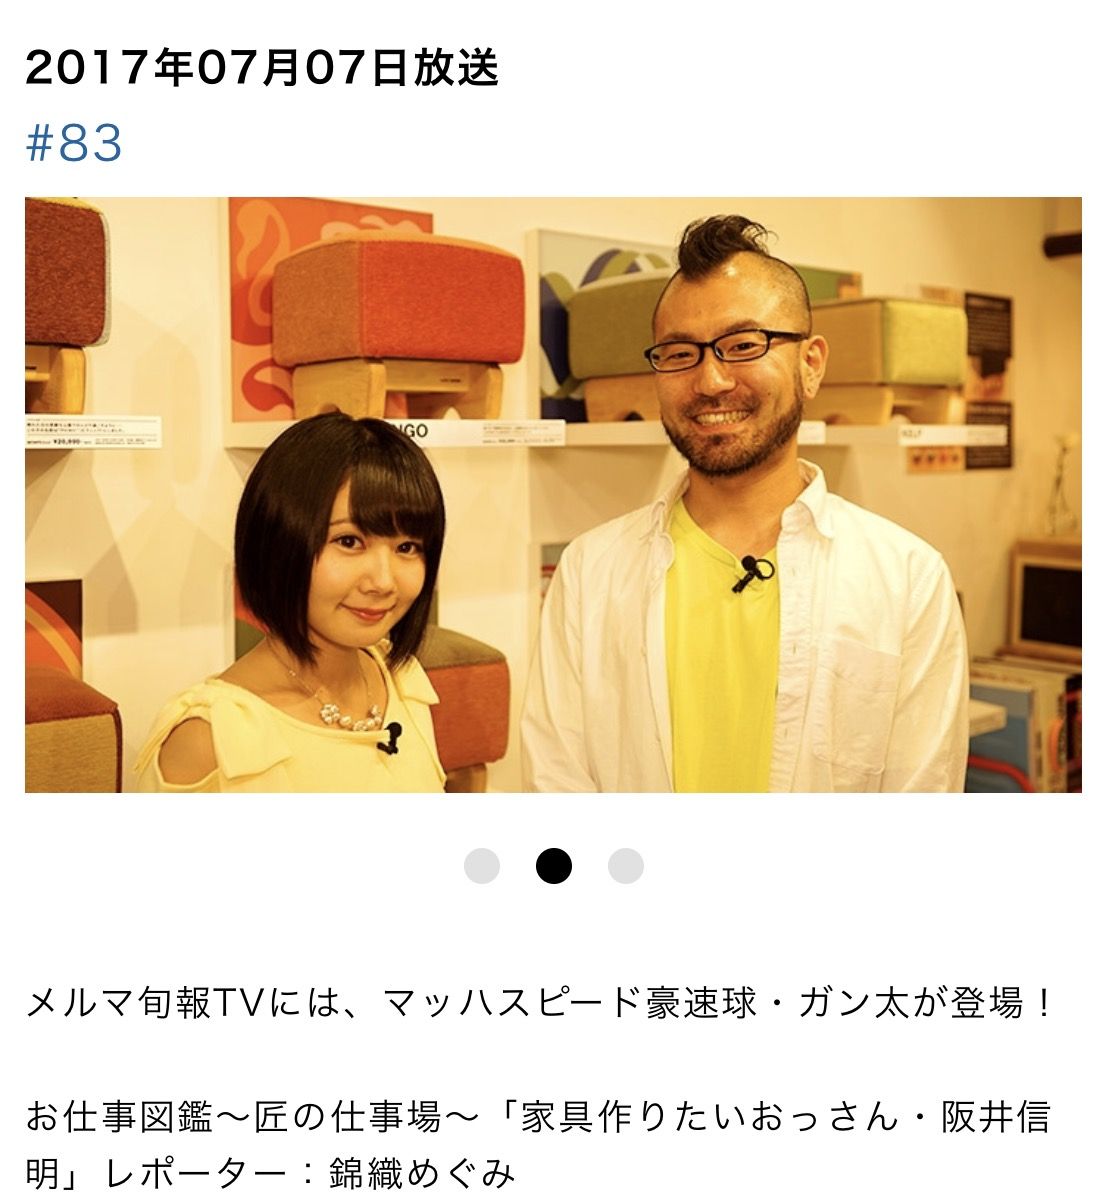 BOOKSTAND.TV紹介